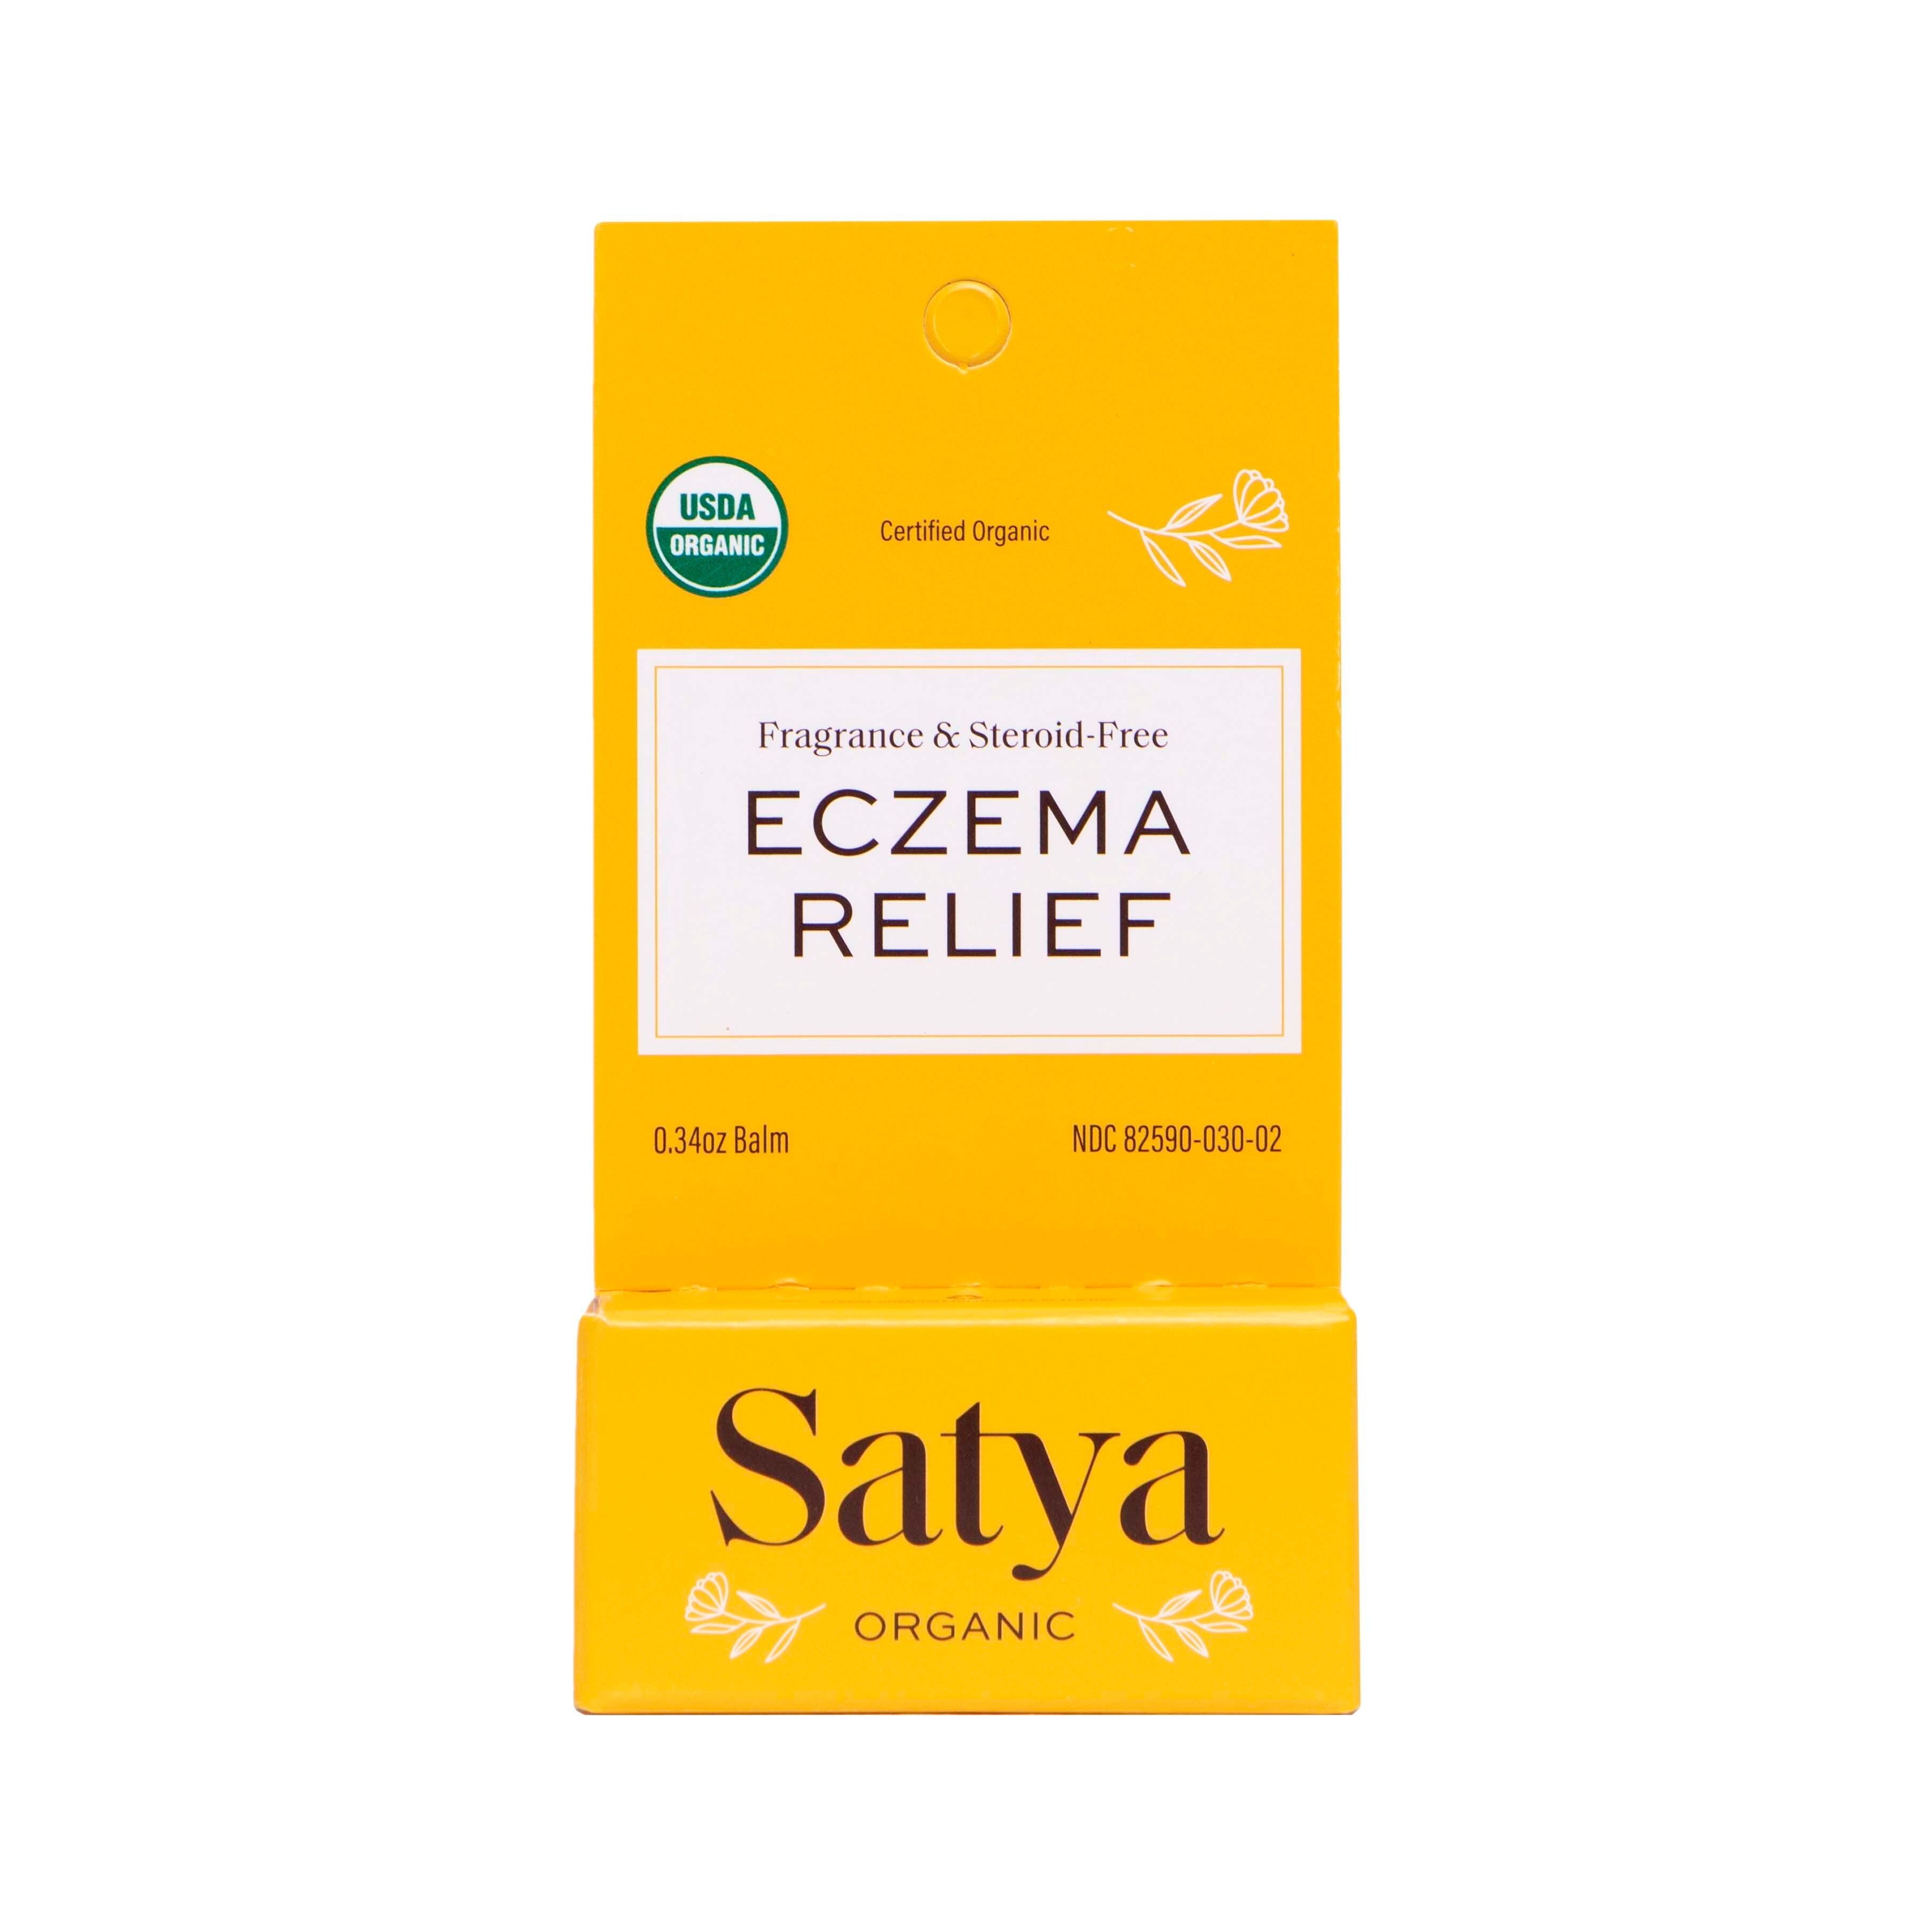 Satya Eczema Relief balm, 0.34oz tin